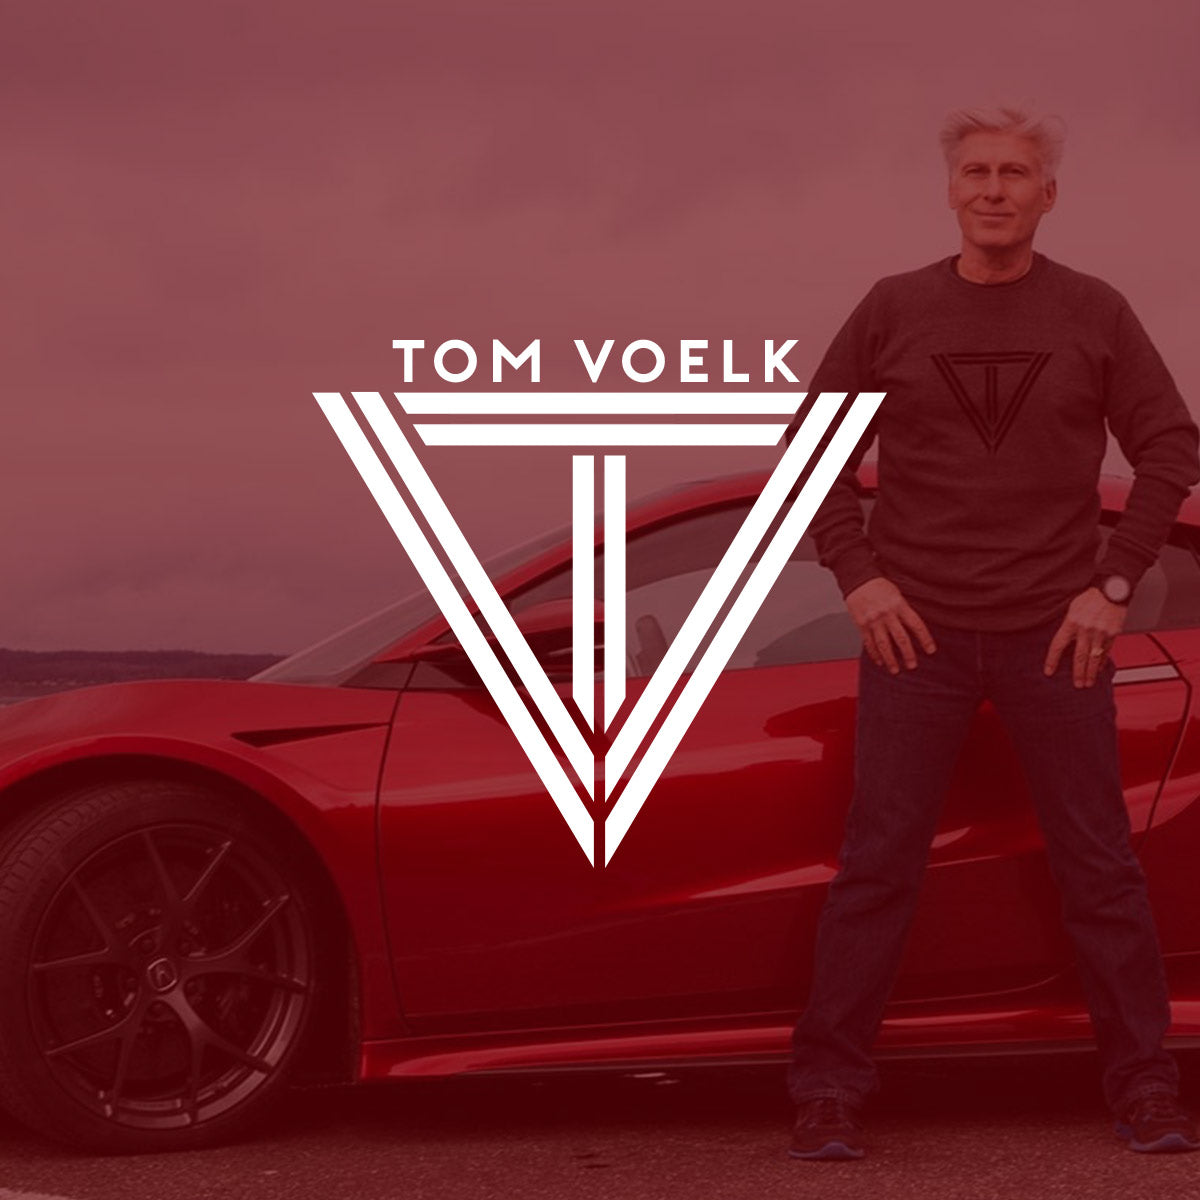 Tom Voelk Brand, Website, & Apparel